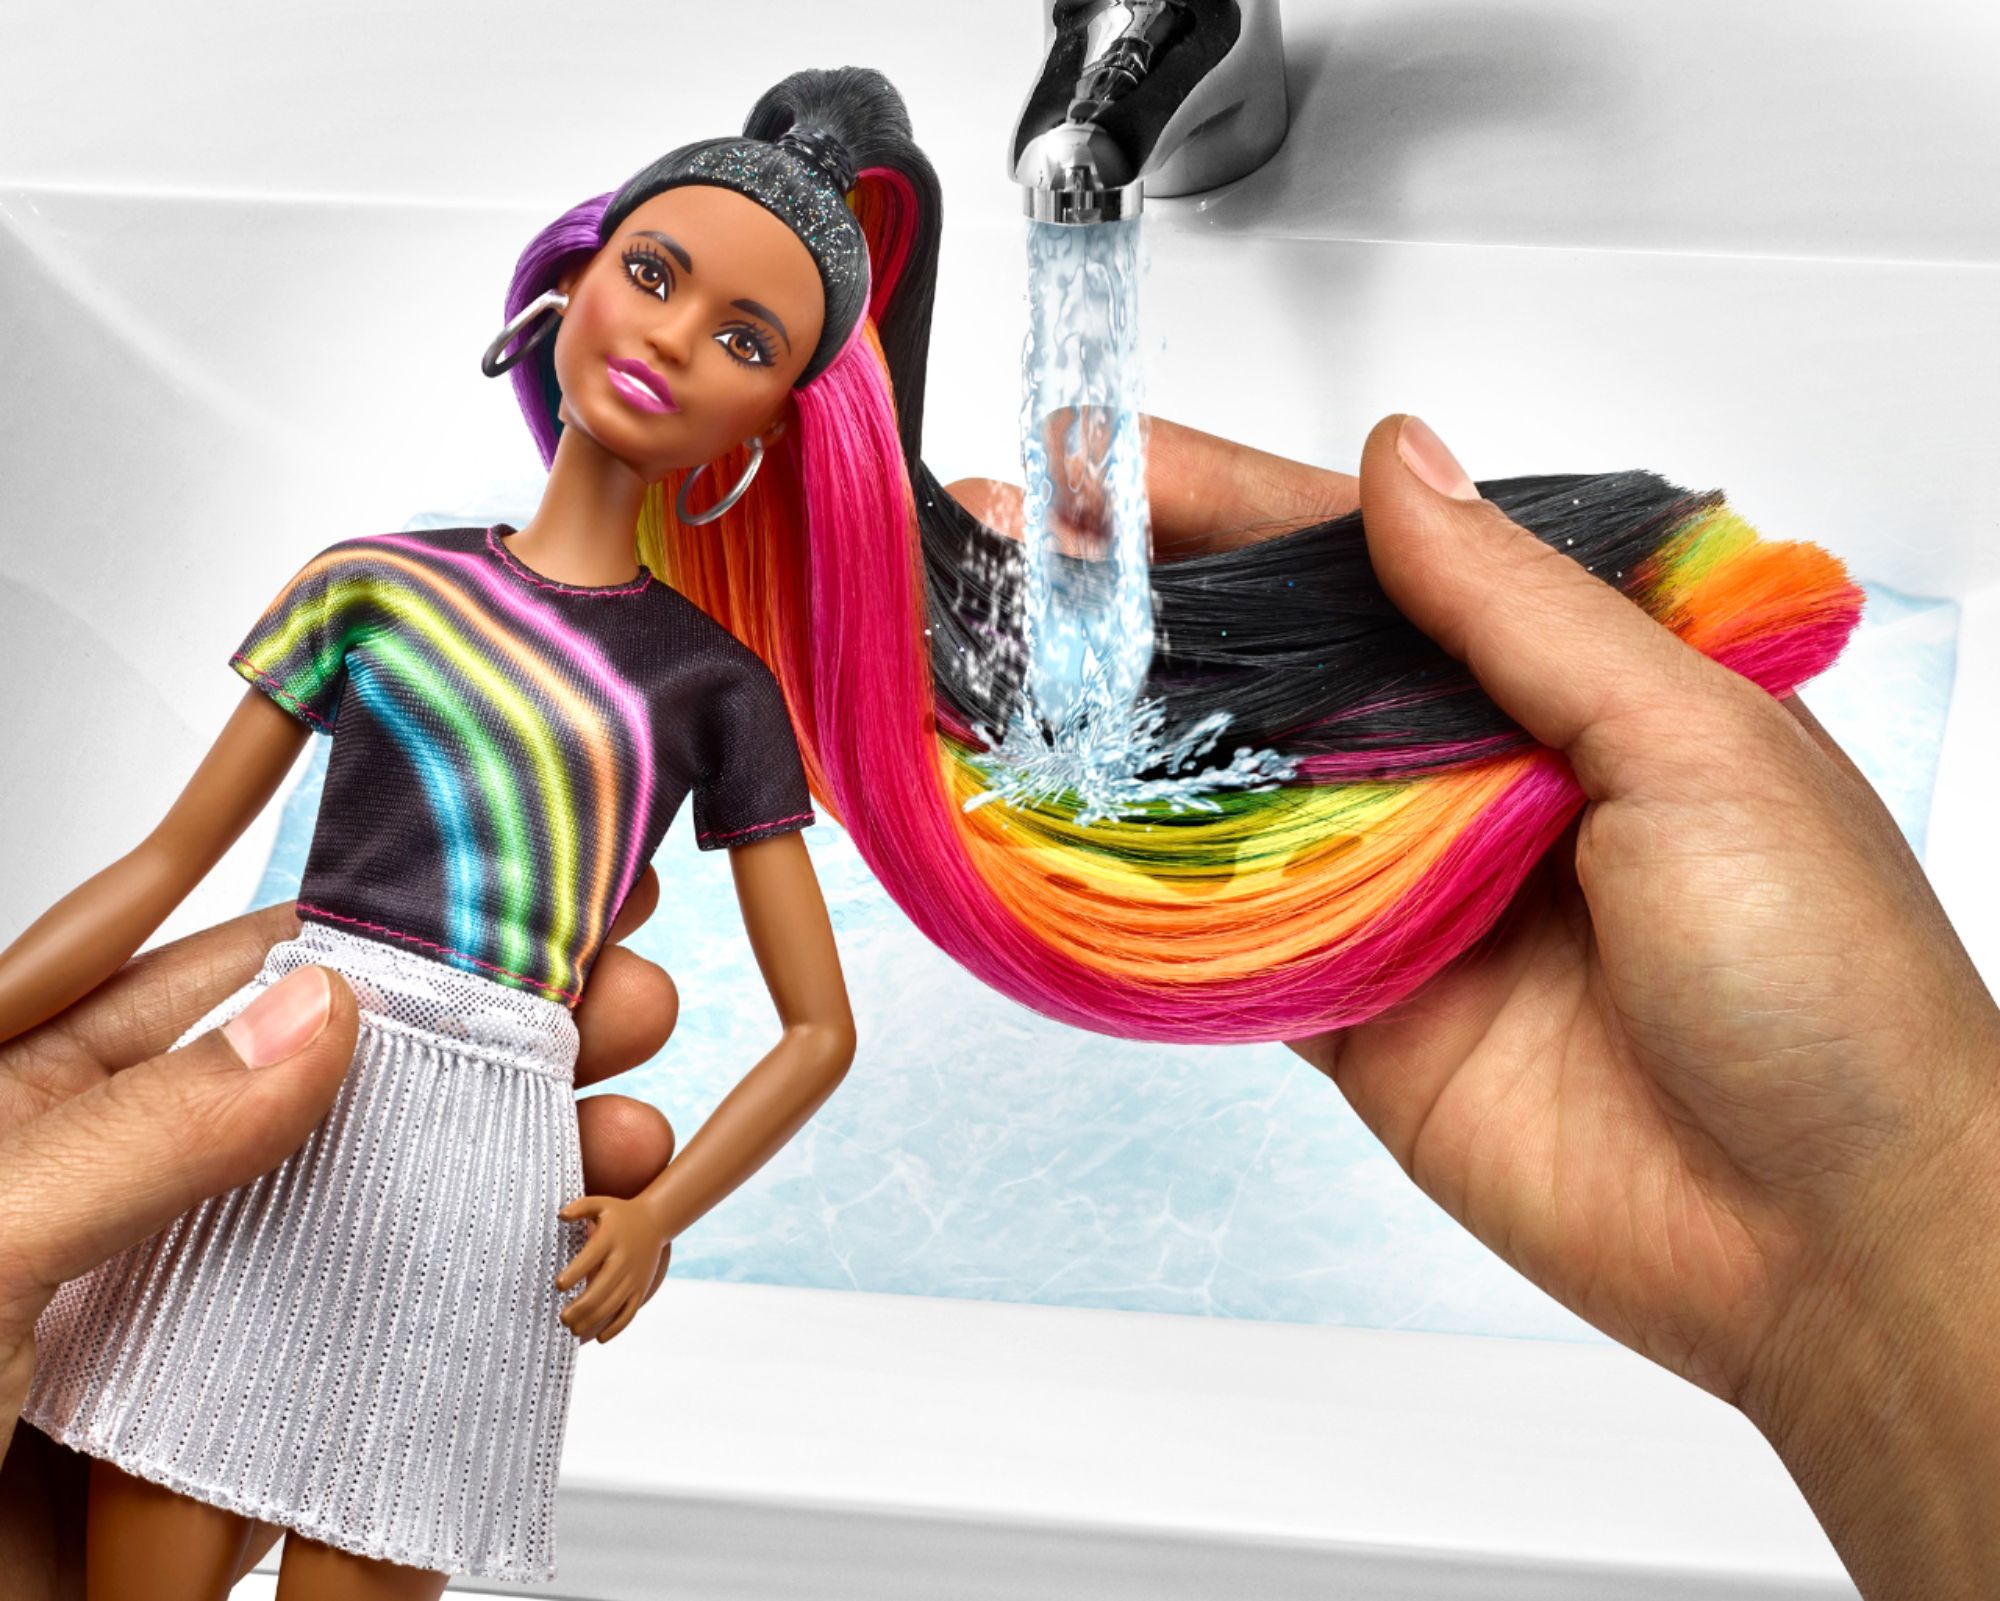 Barbie  Barbie Rainbow Sparkle Hair Demo Video 